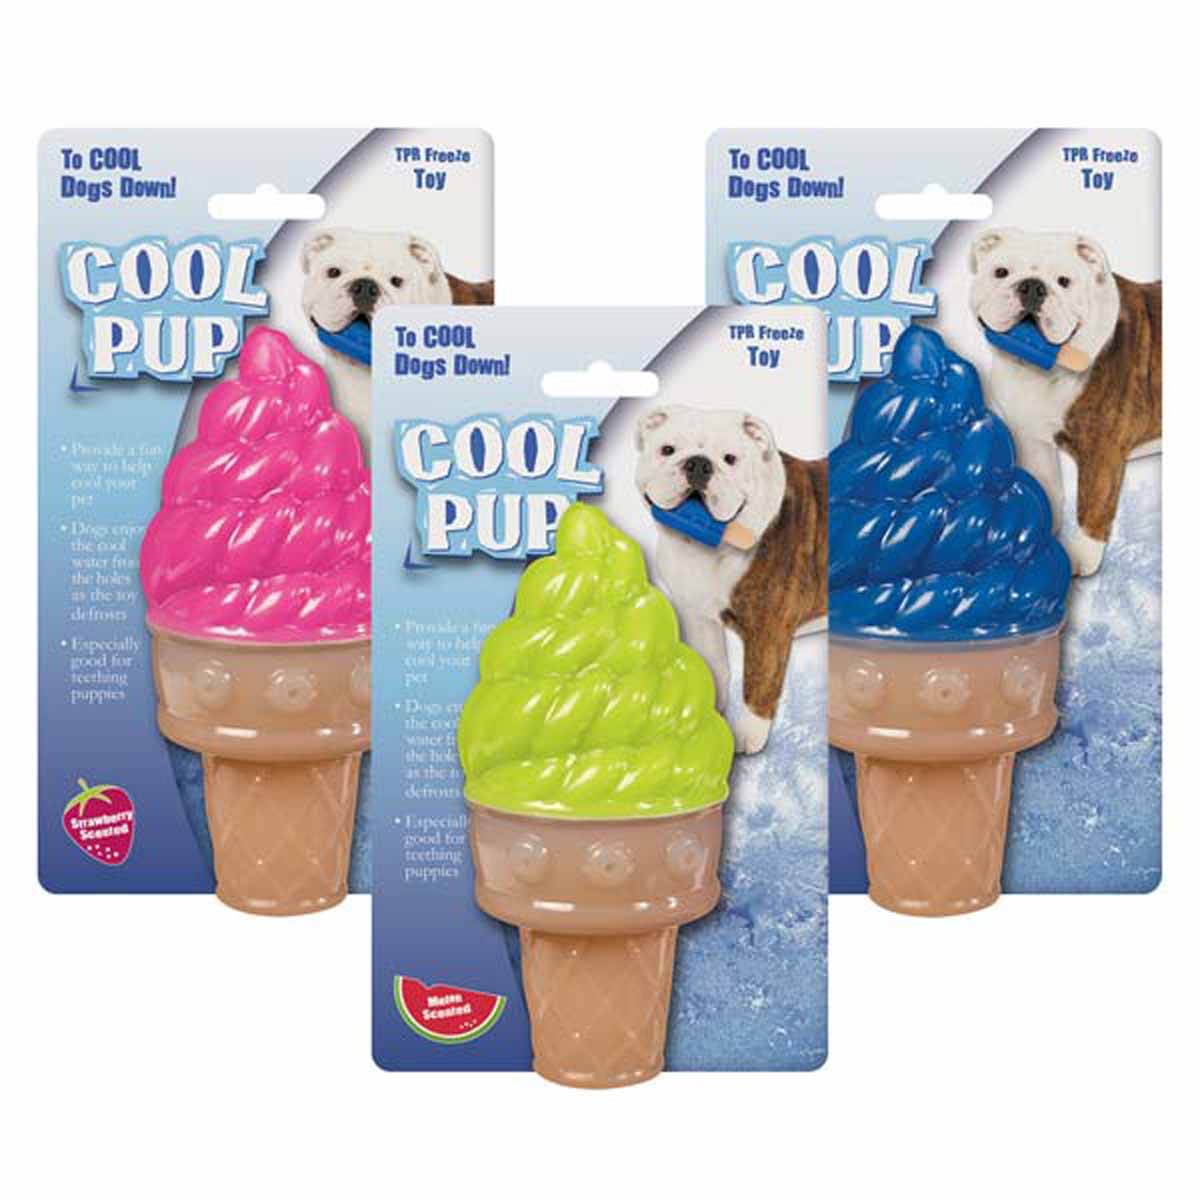 Ice Cream for Dogs